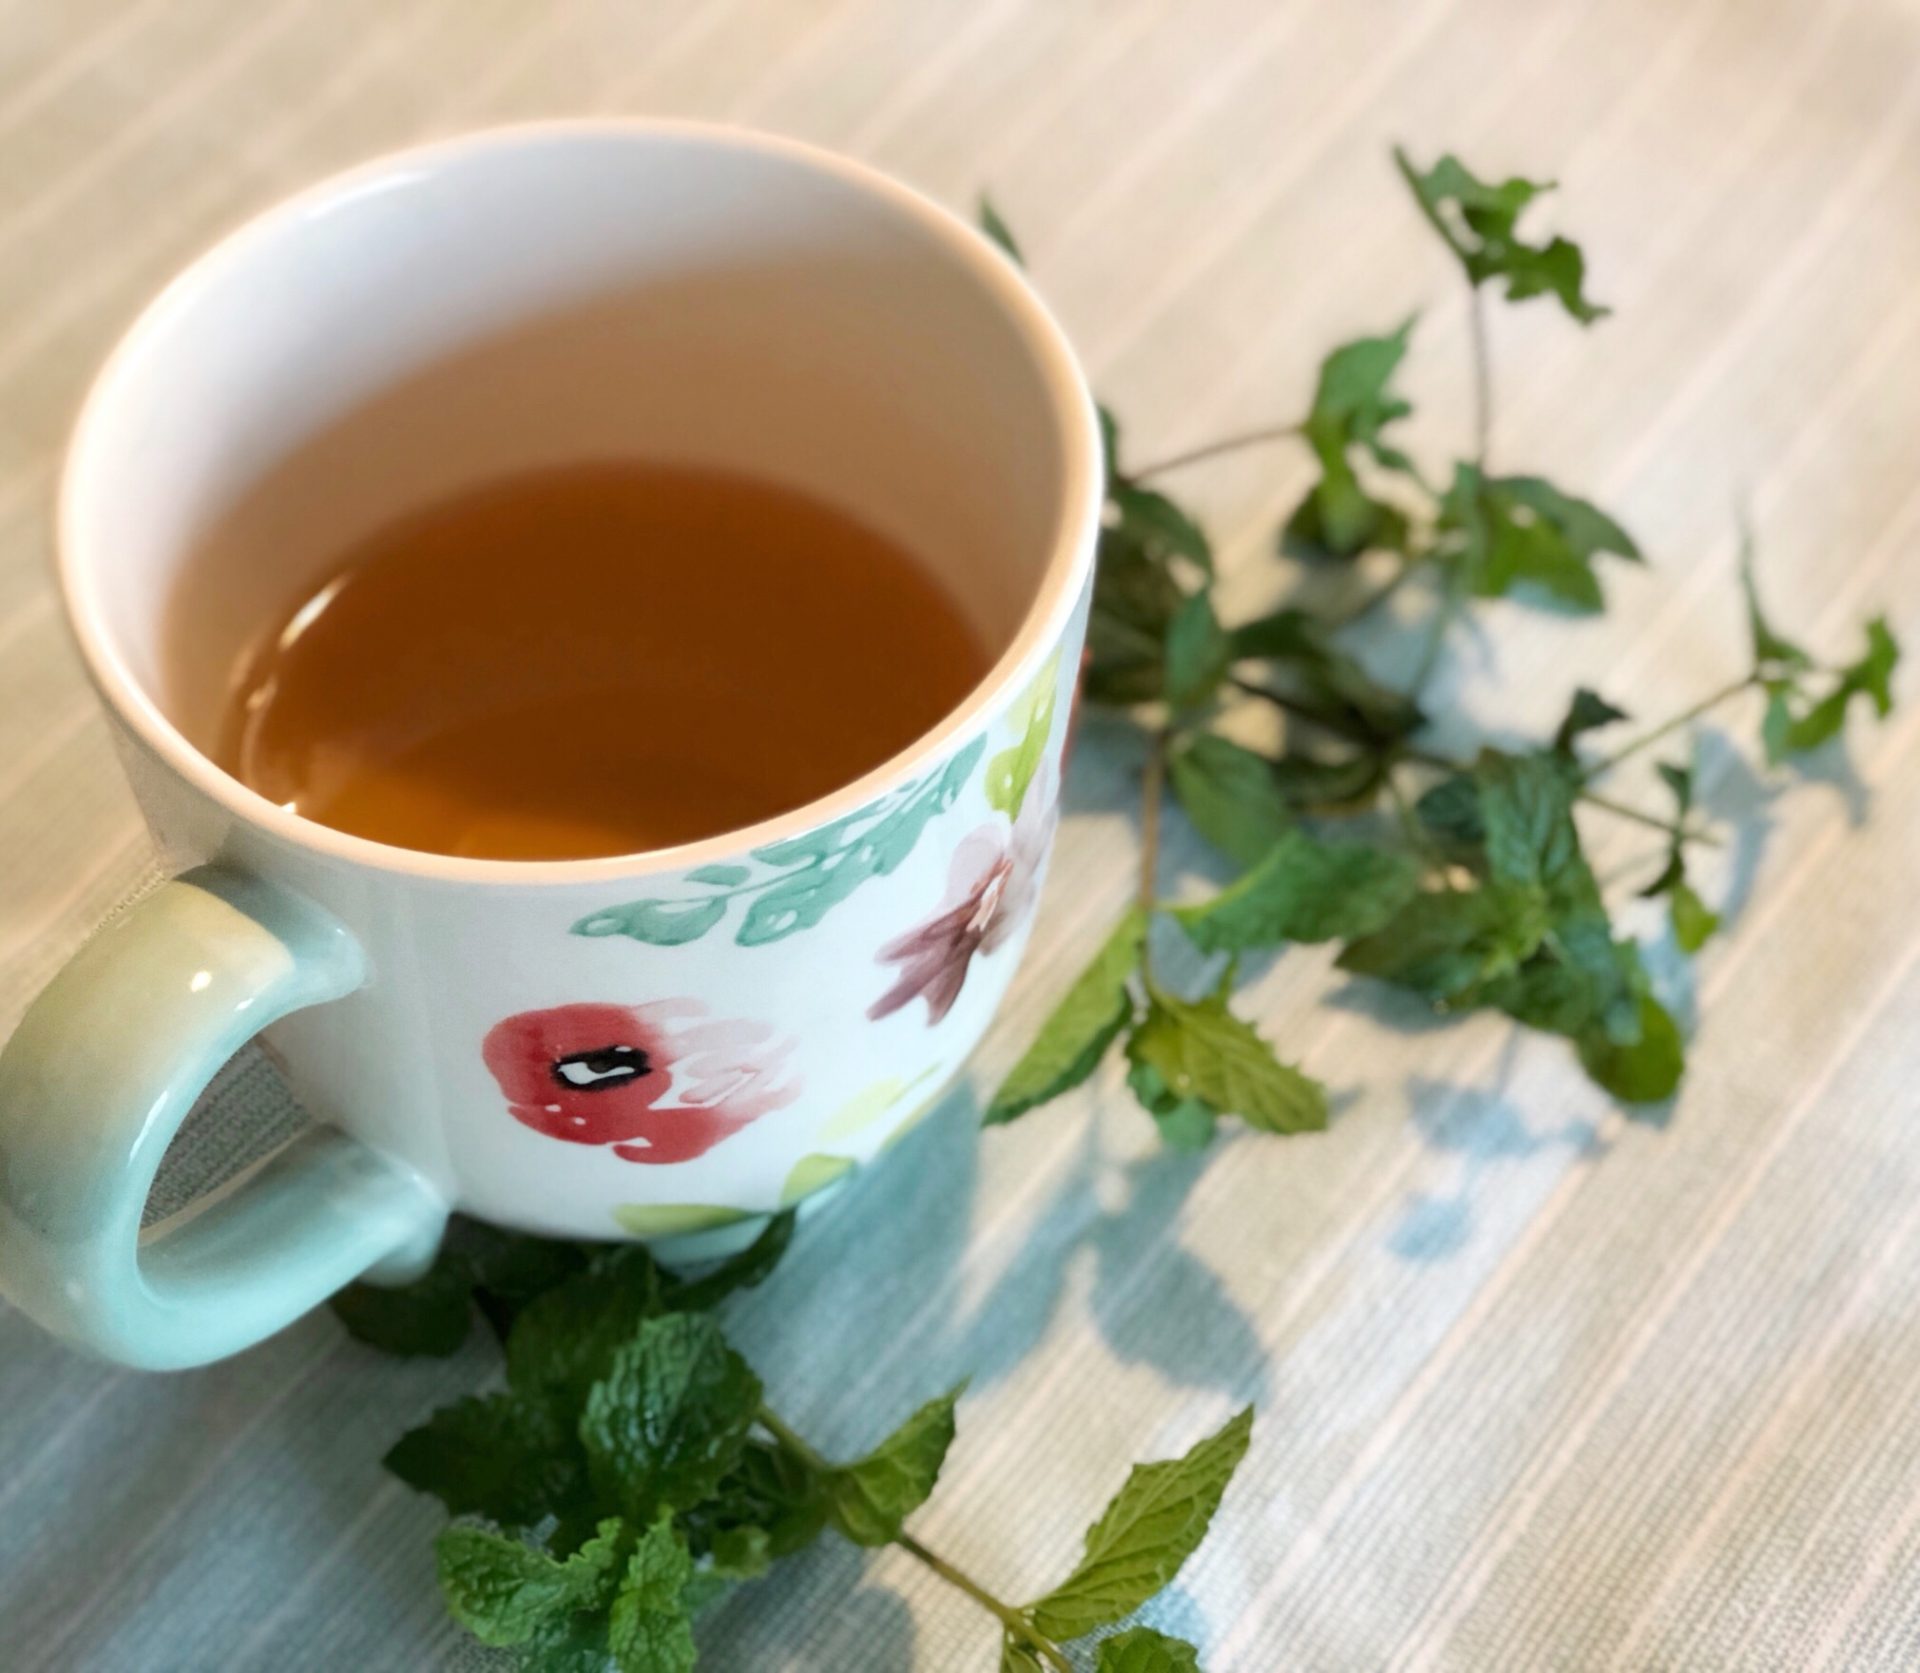 fresh home-made home-grown organic garden-fresh mint herbal tea